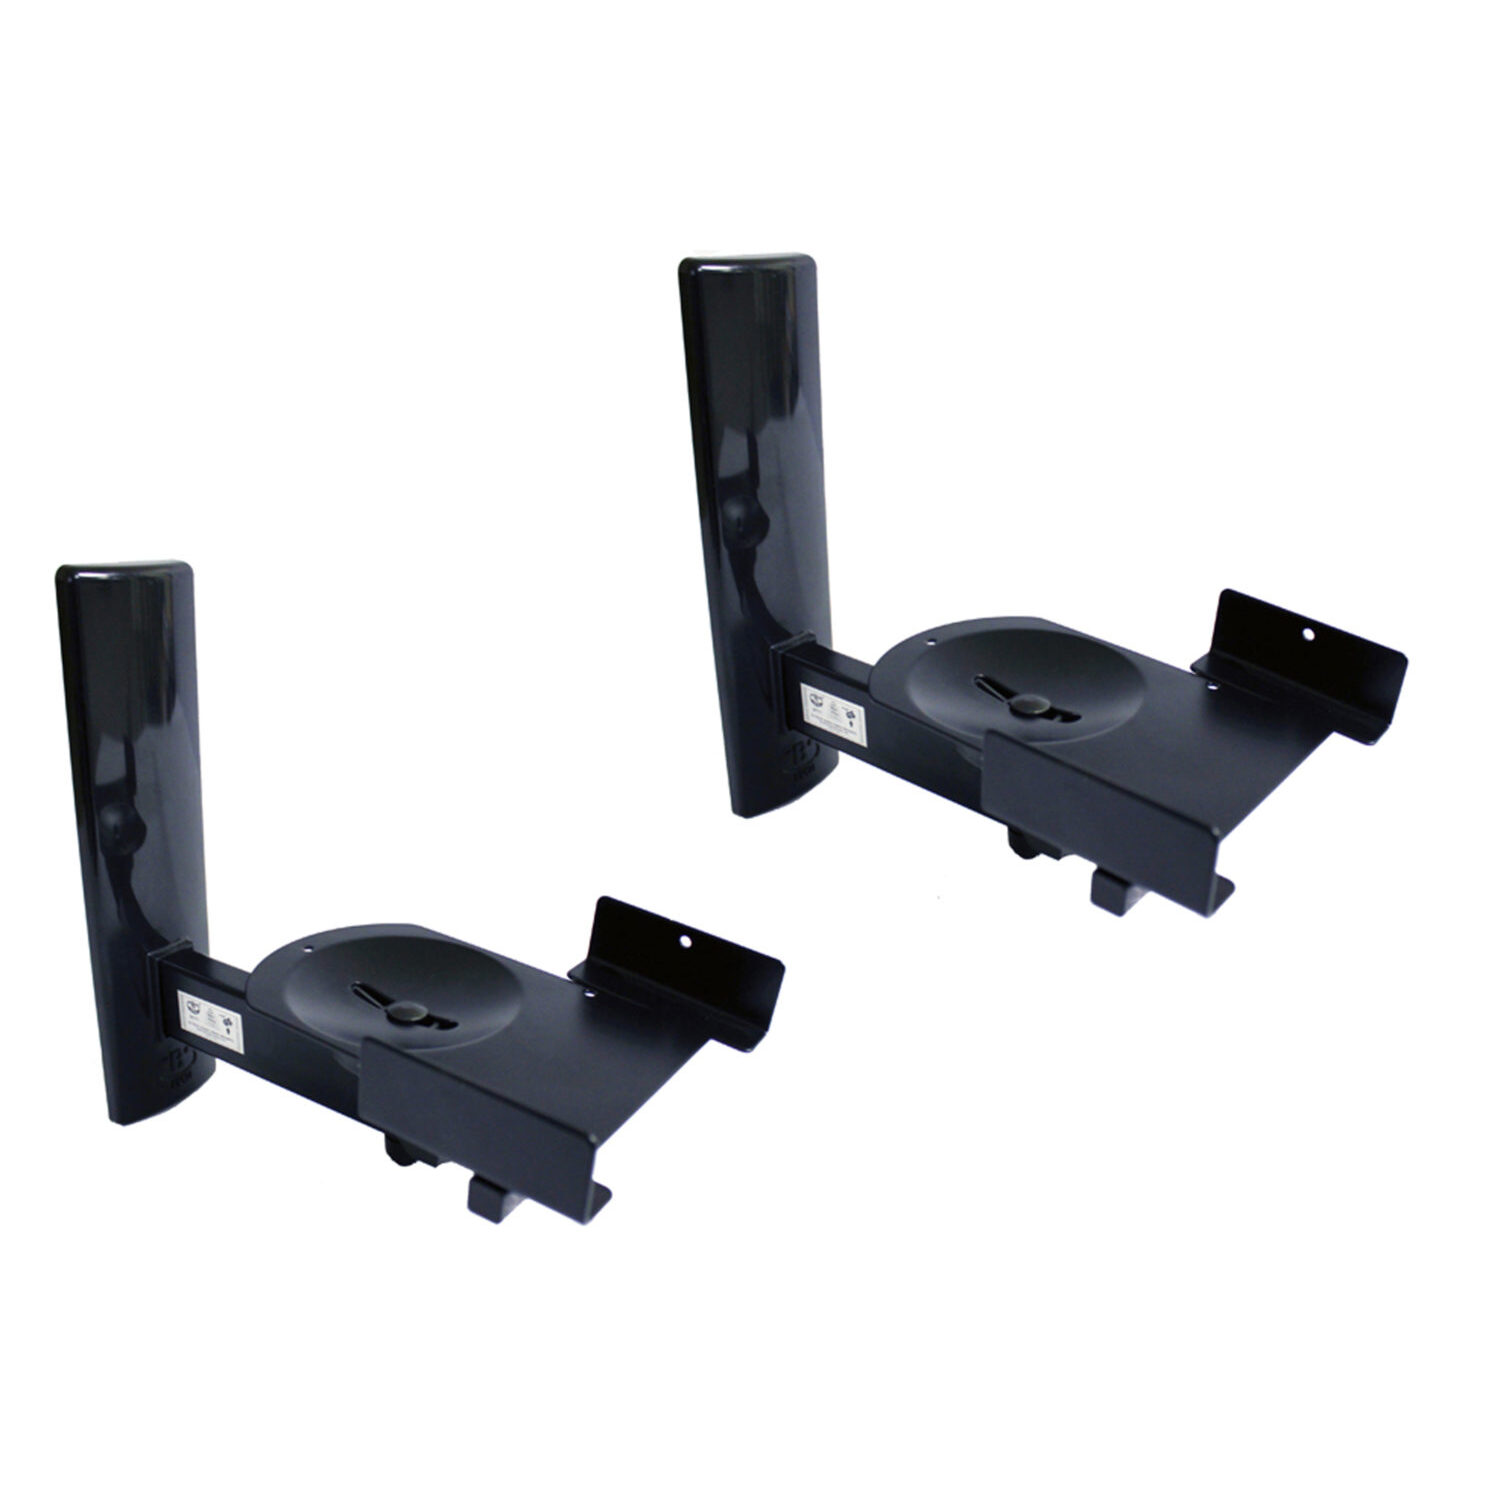 Rocelco B-Tech Ultra Grip-Pro Speaker Mount in Black Finish (Set of 2) - image 2 of 4